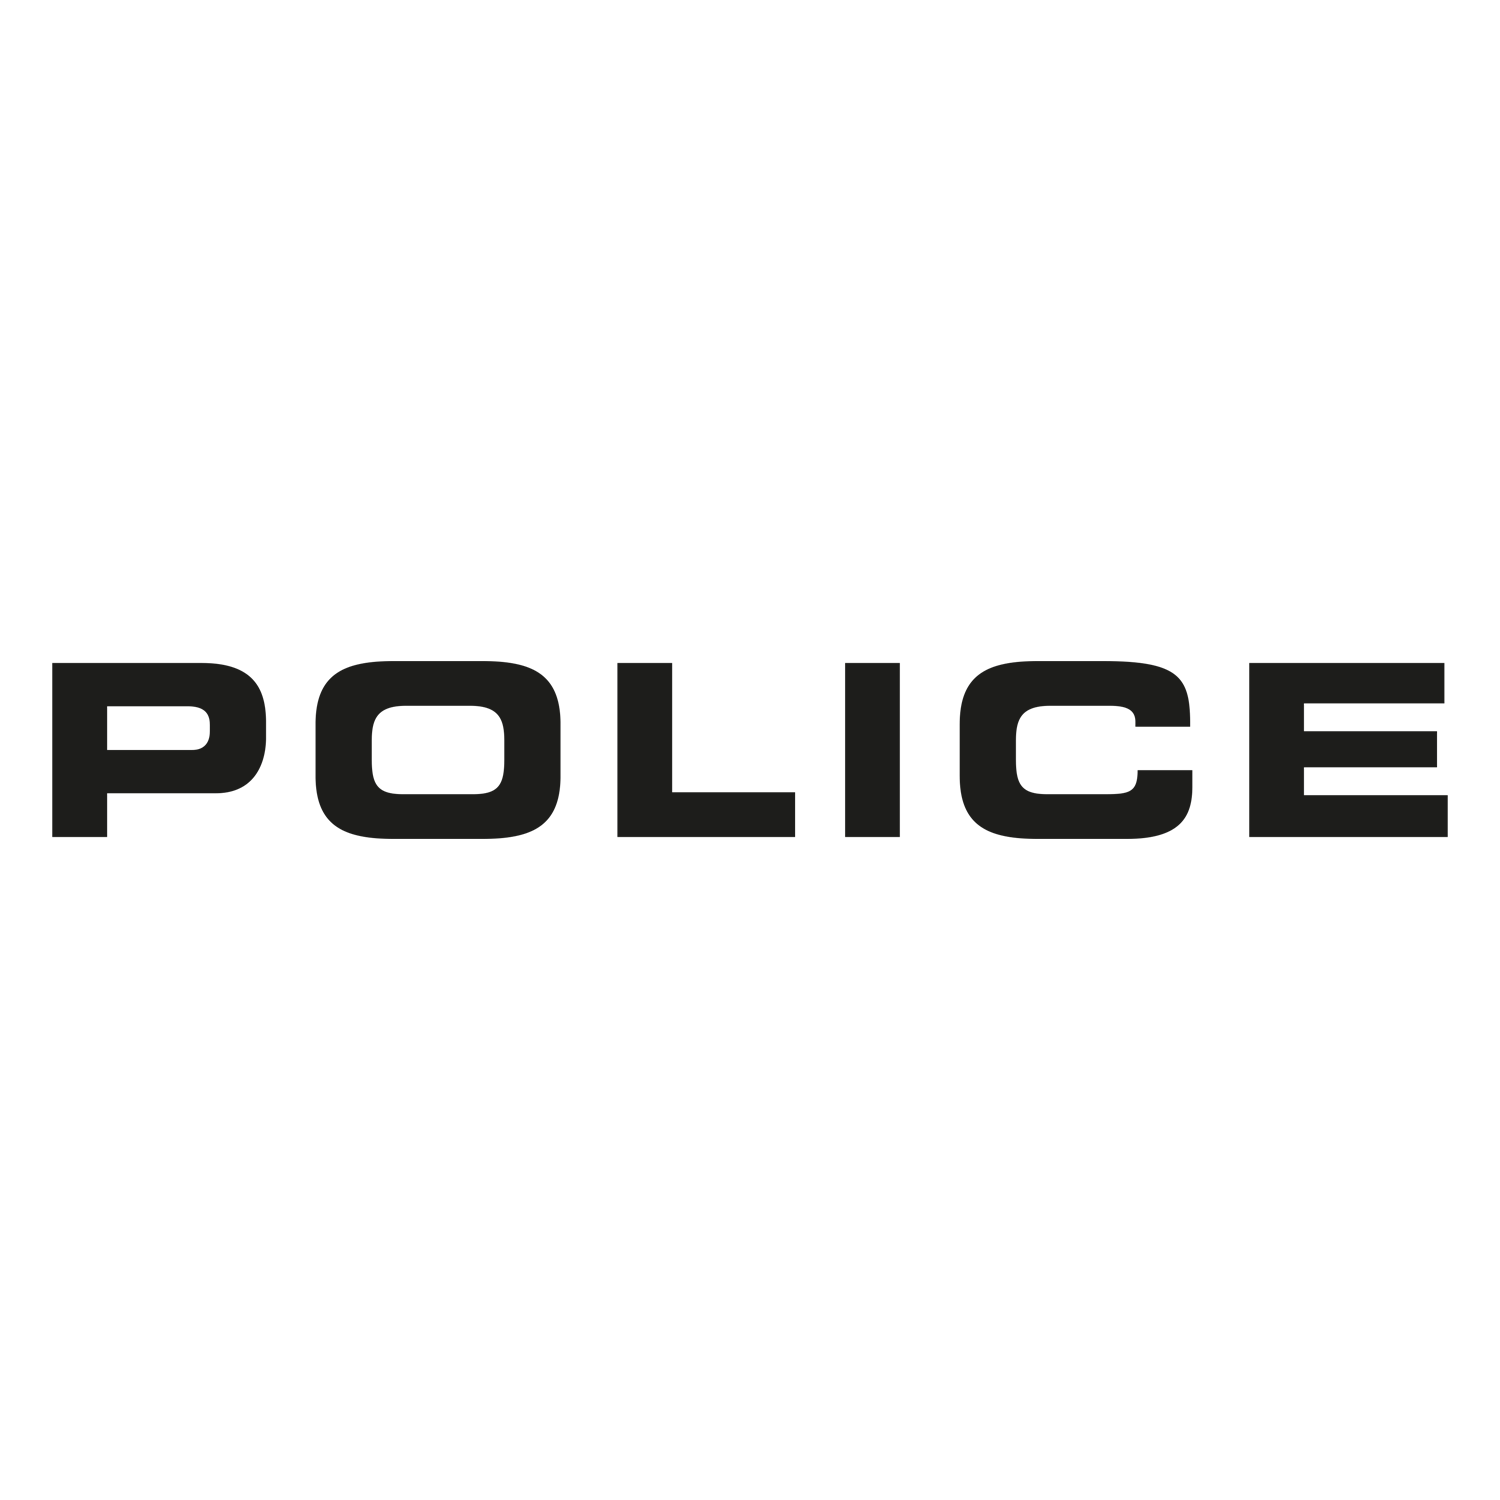 Brand: Police